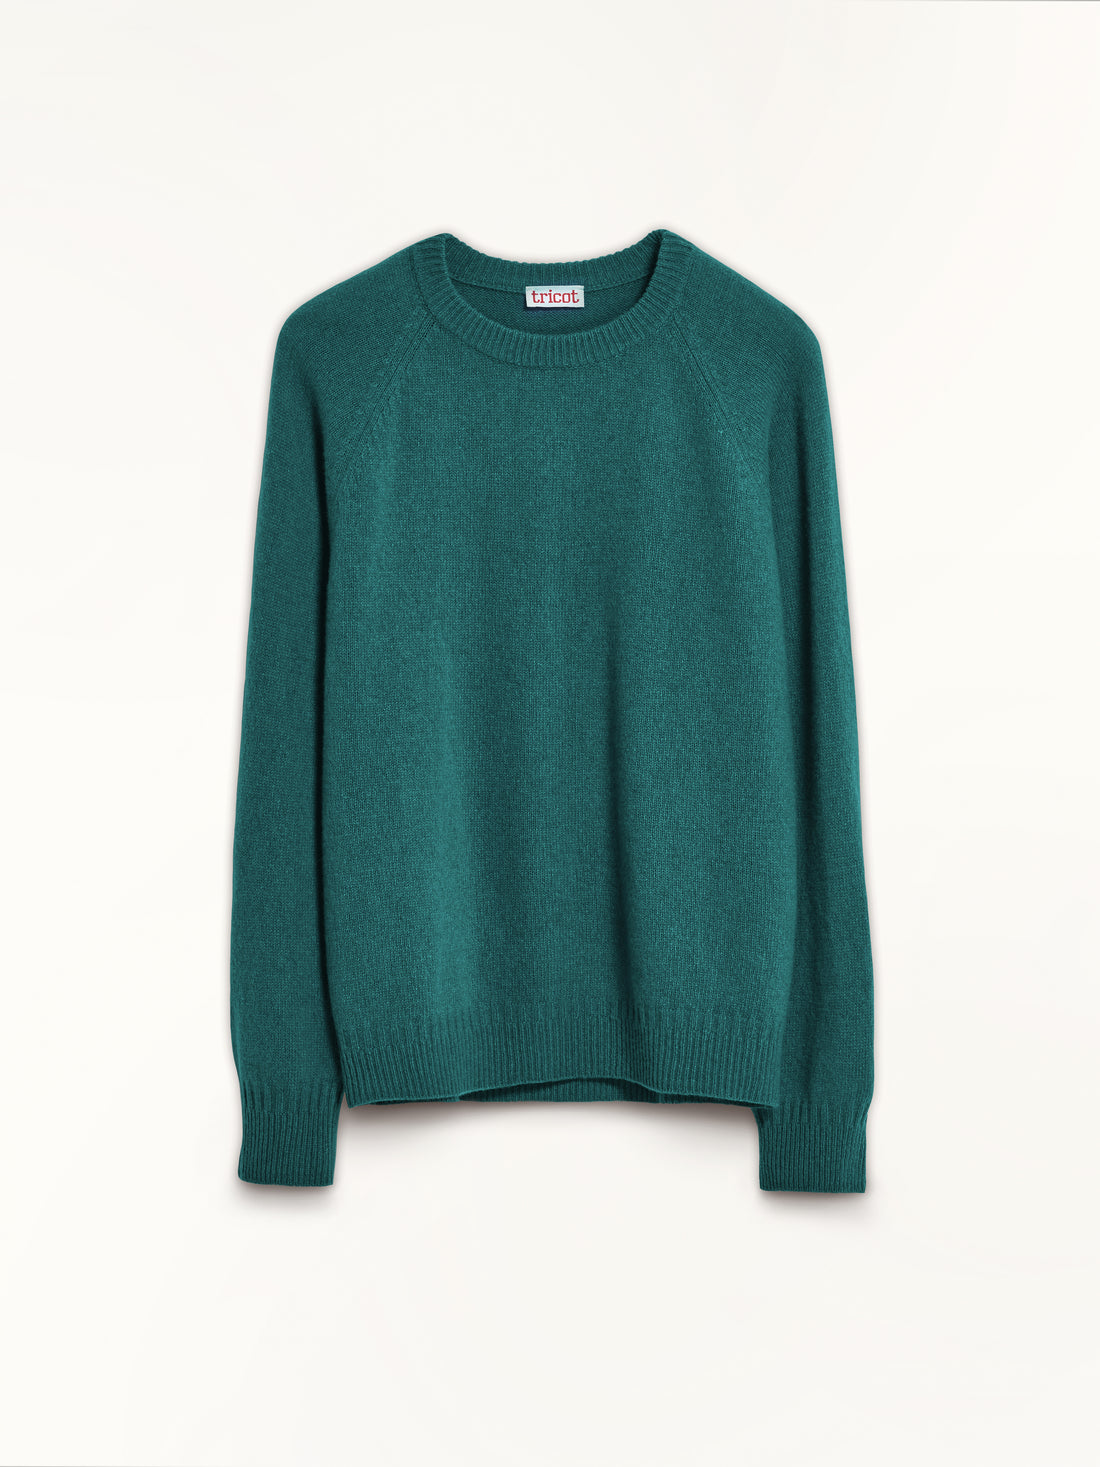 Women's cashmere crewneck sweater in Bottle-green